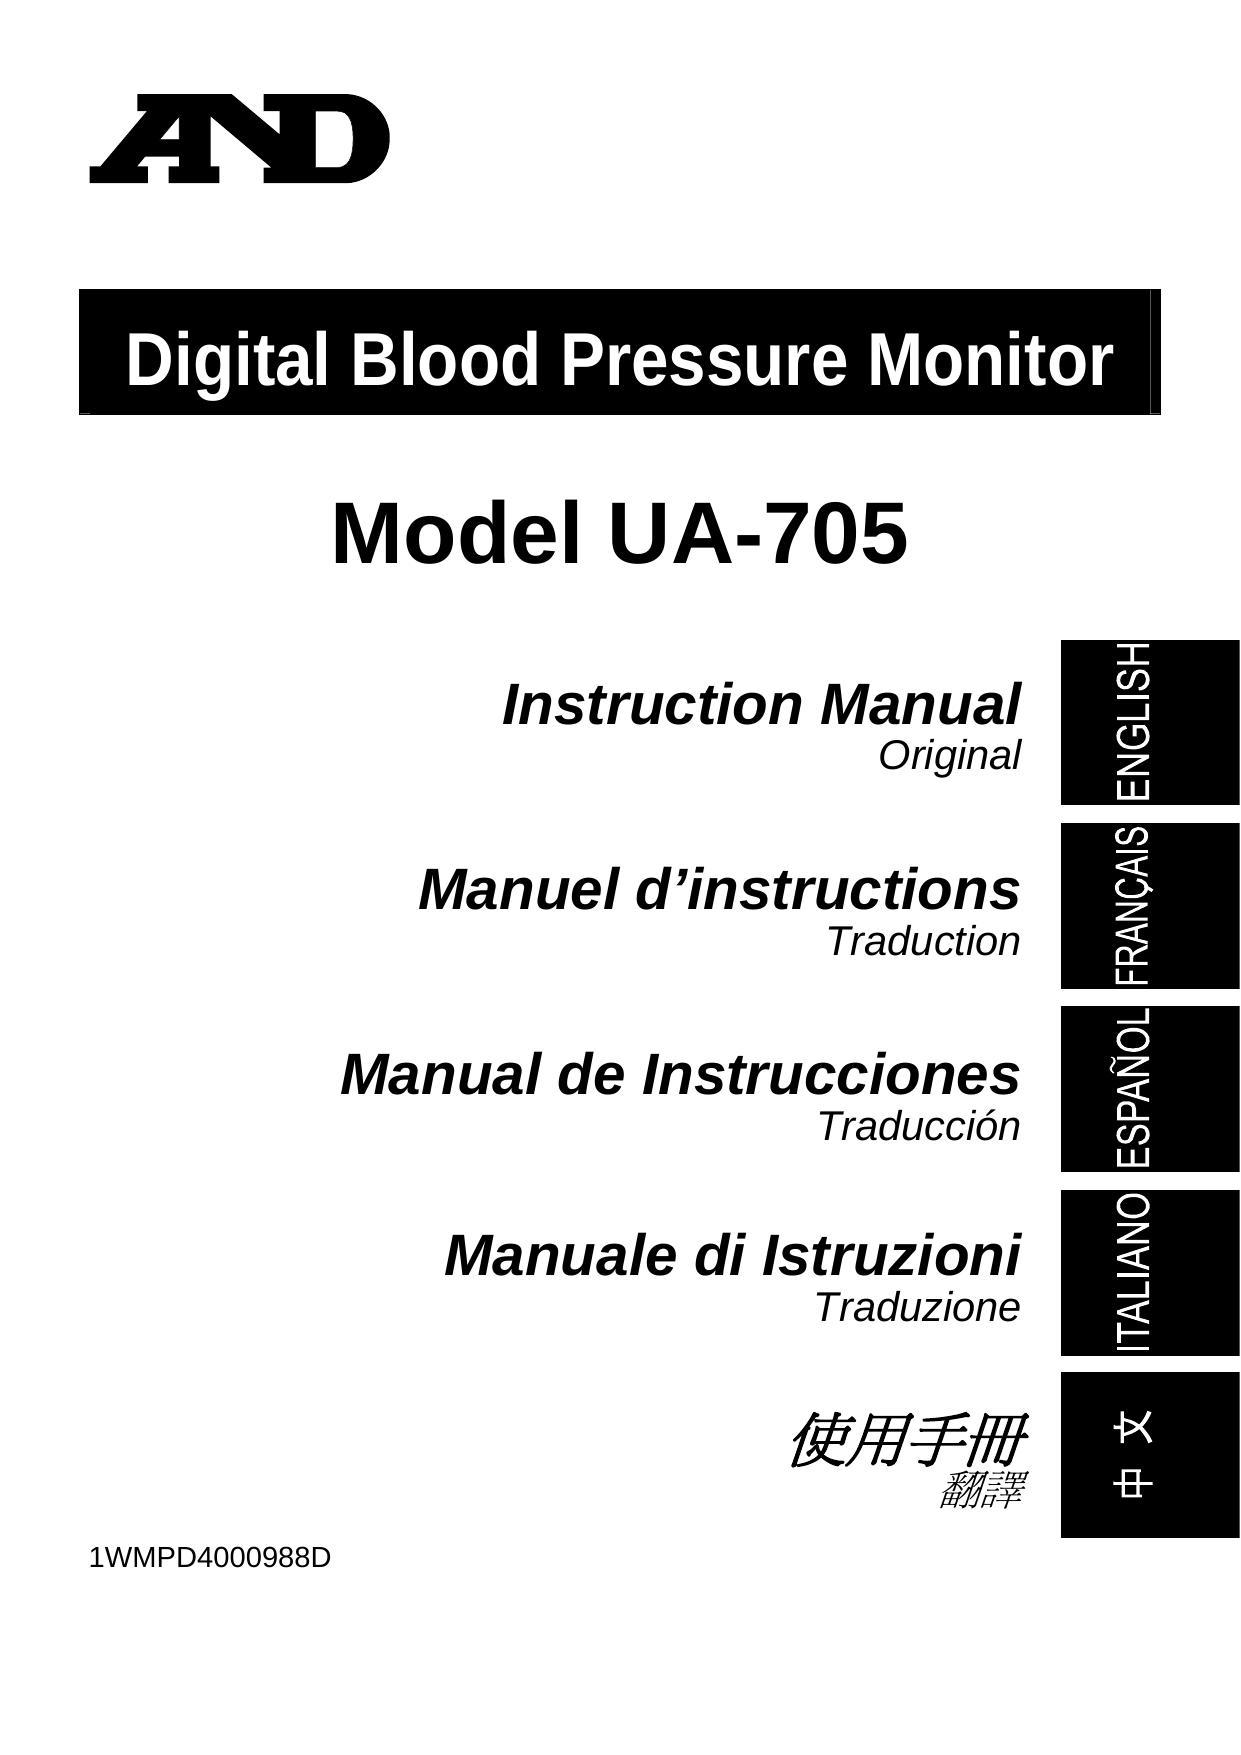 ad-digital-blood-pressure-monitor-model-ua-705-instruction-manual.pdf